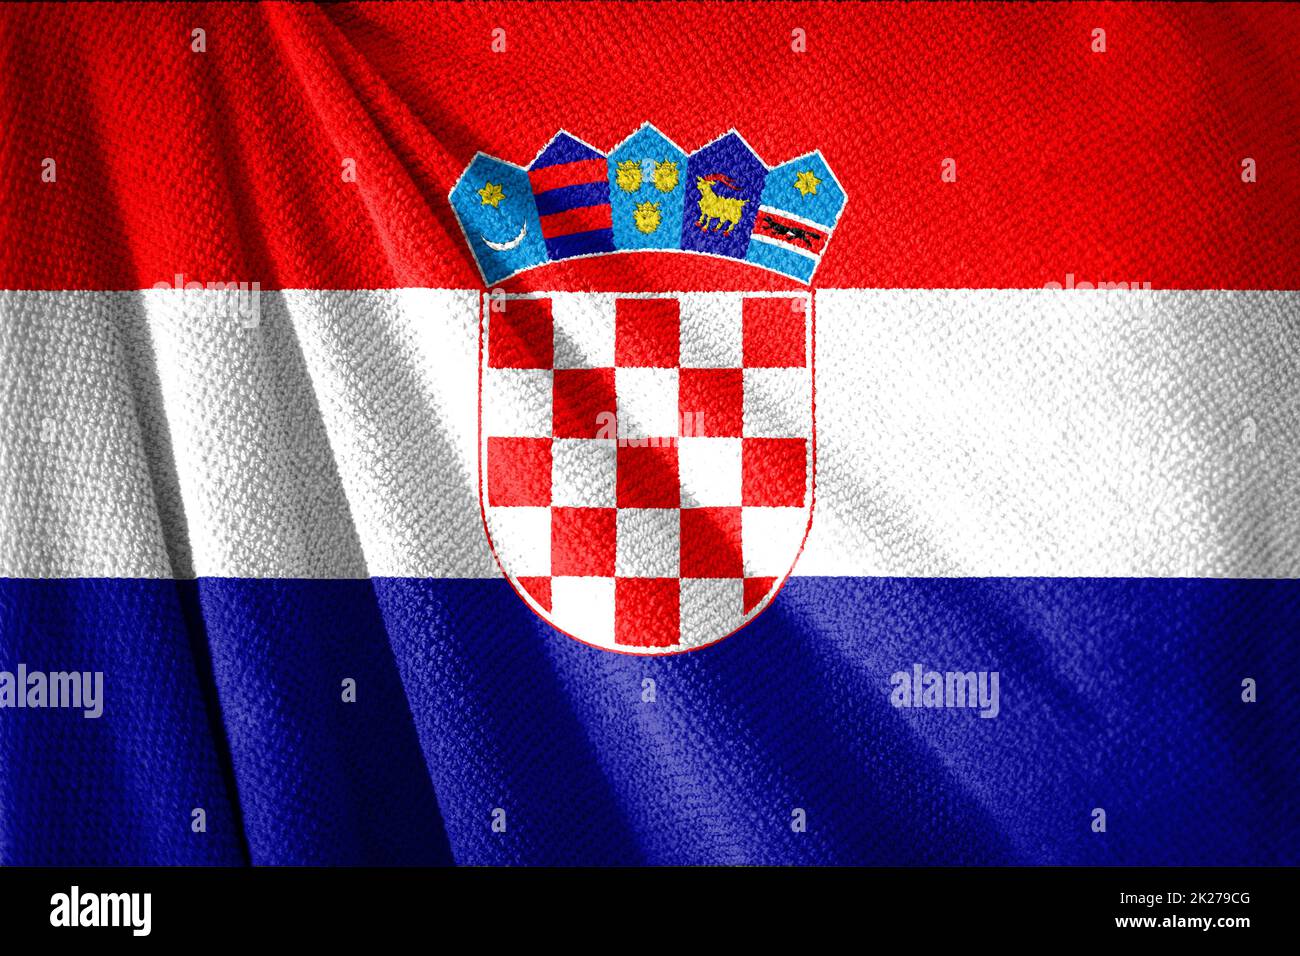 Croatia flag on towel surface illustration with Stock Photo